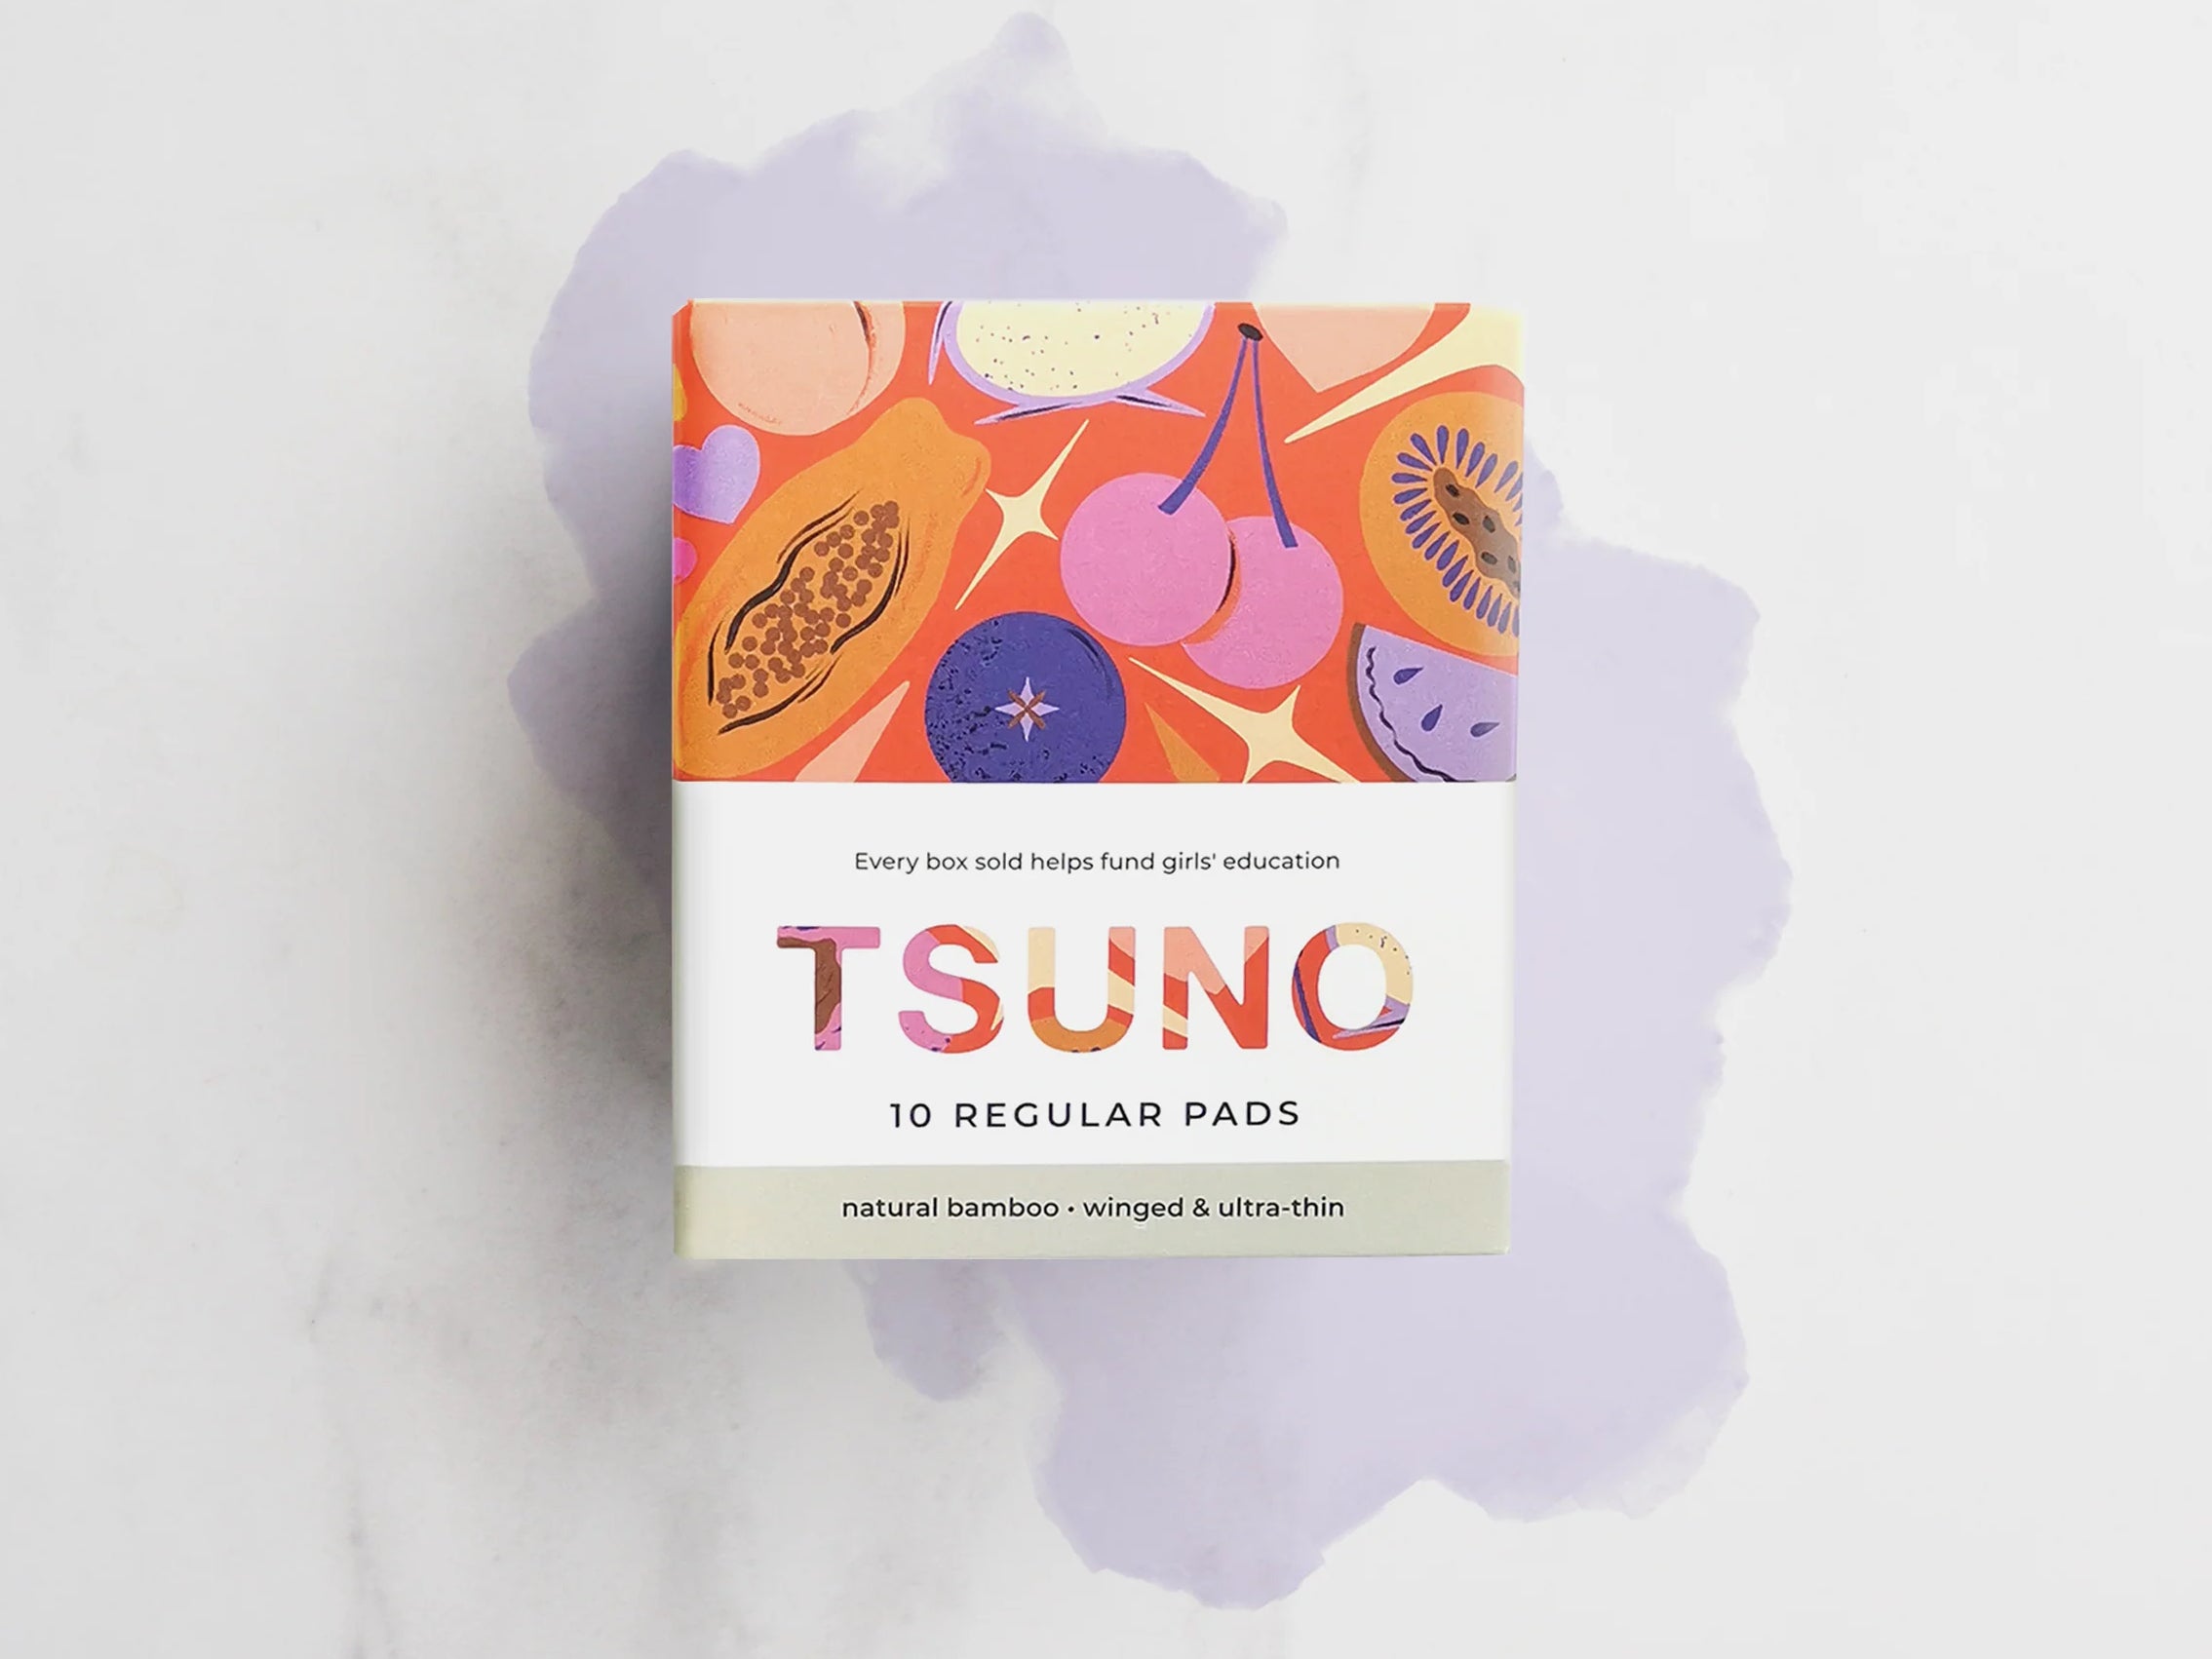 A box of Tsuno tampons